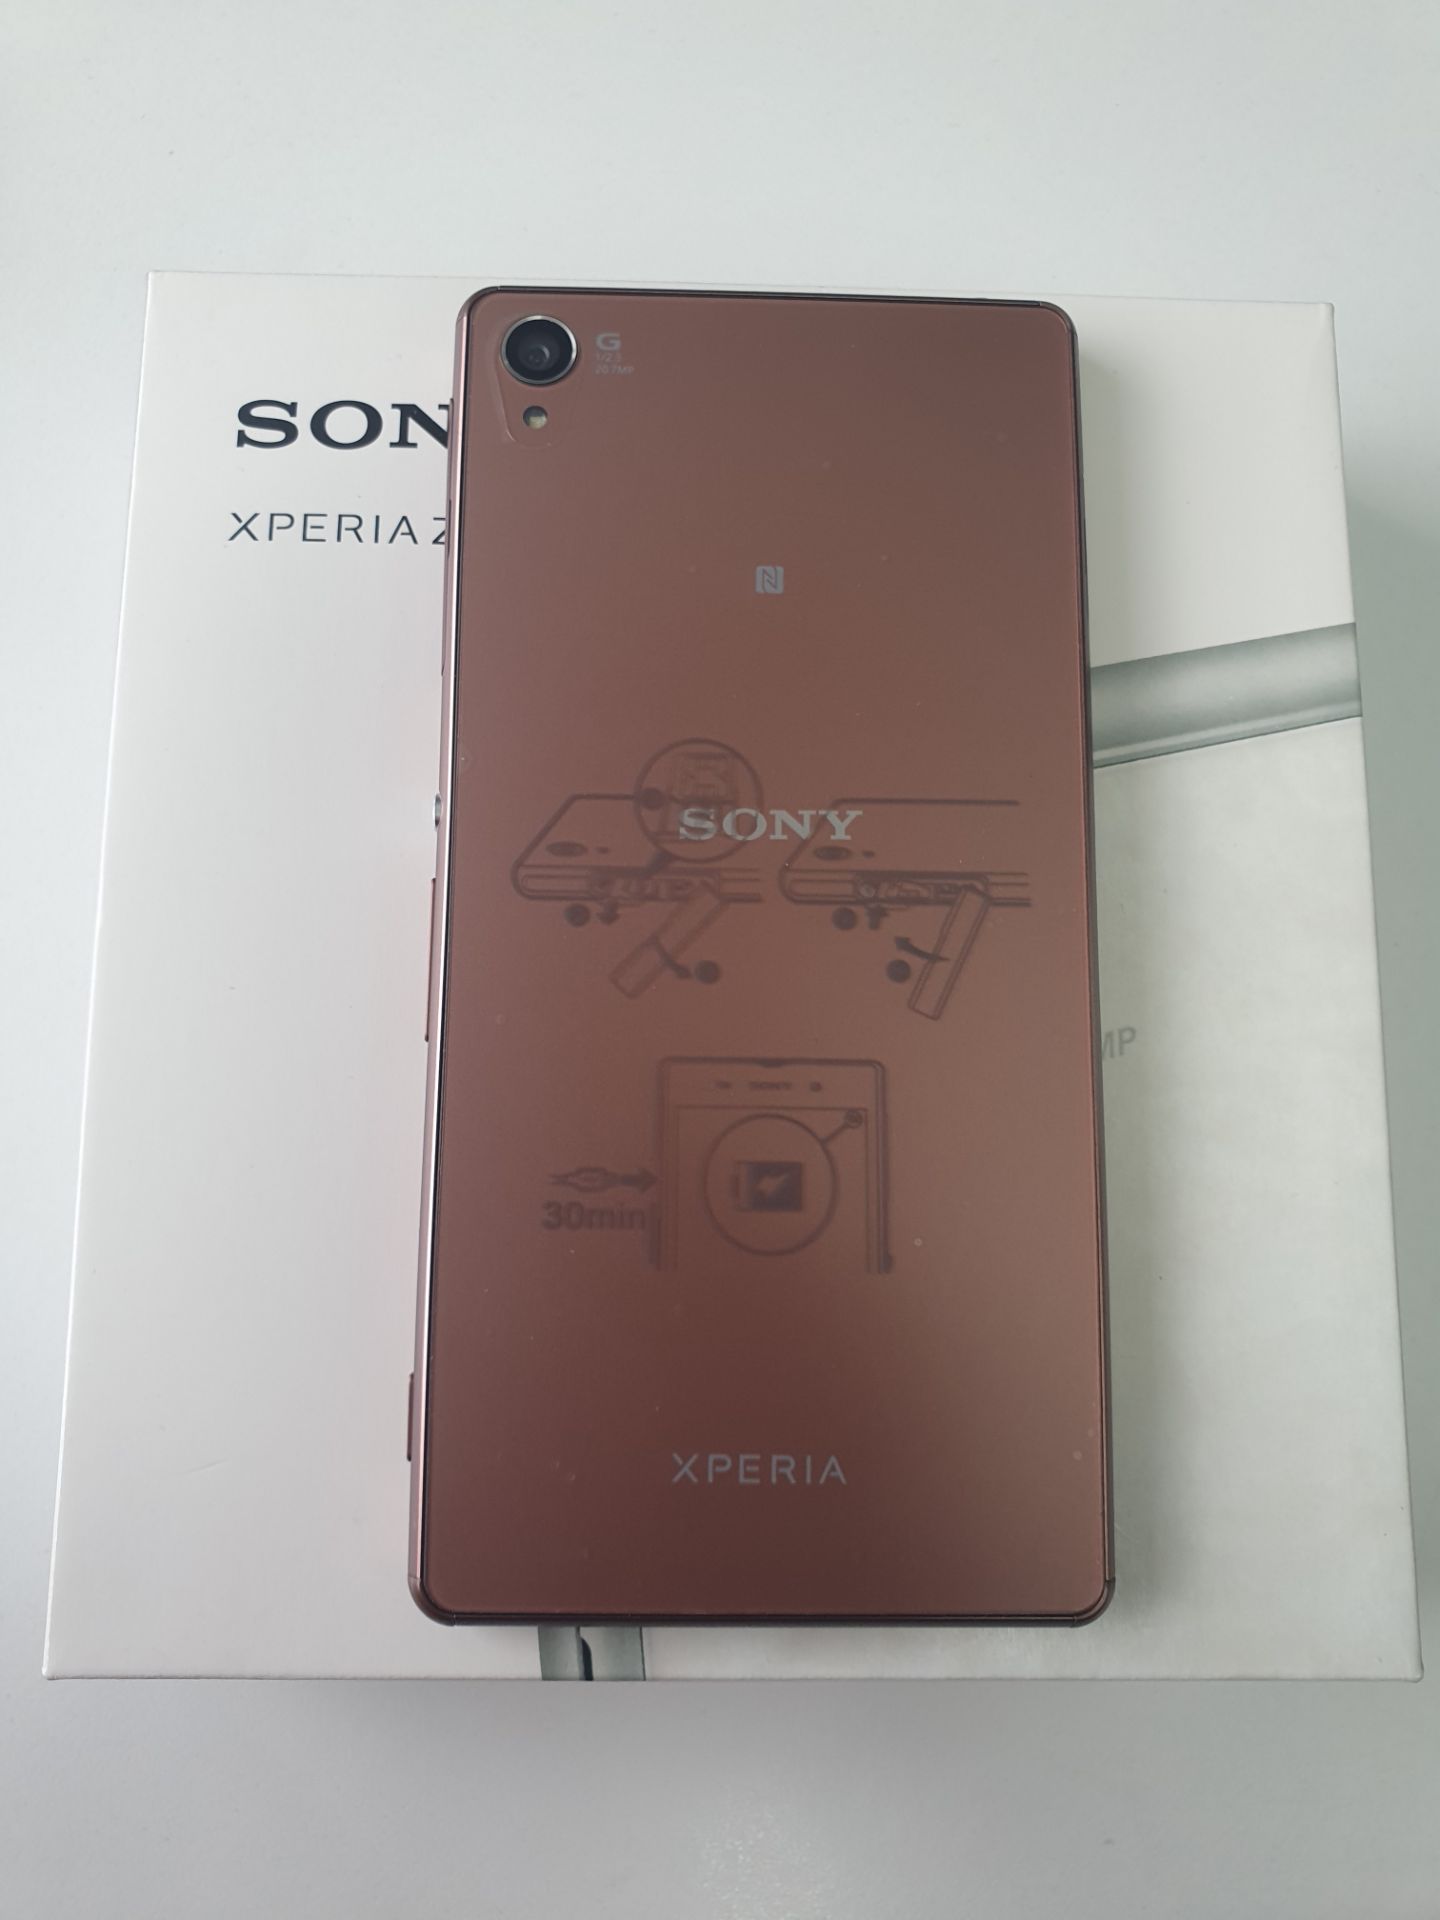 Ex-Display Sony Xperia Z3 - Image 2 of 3